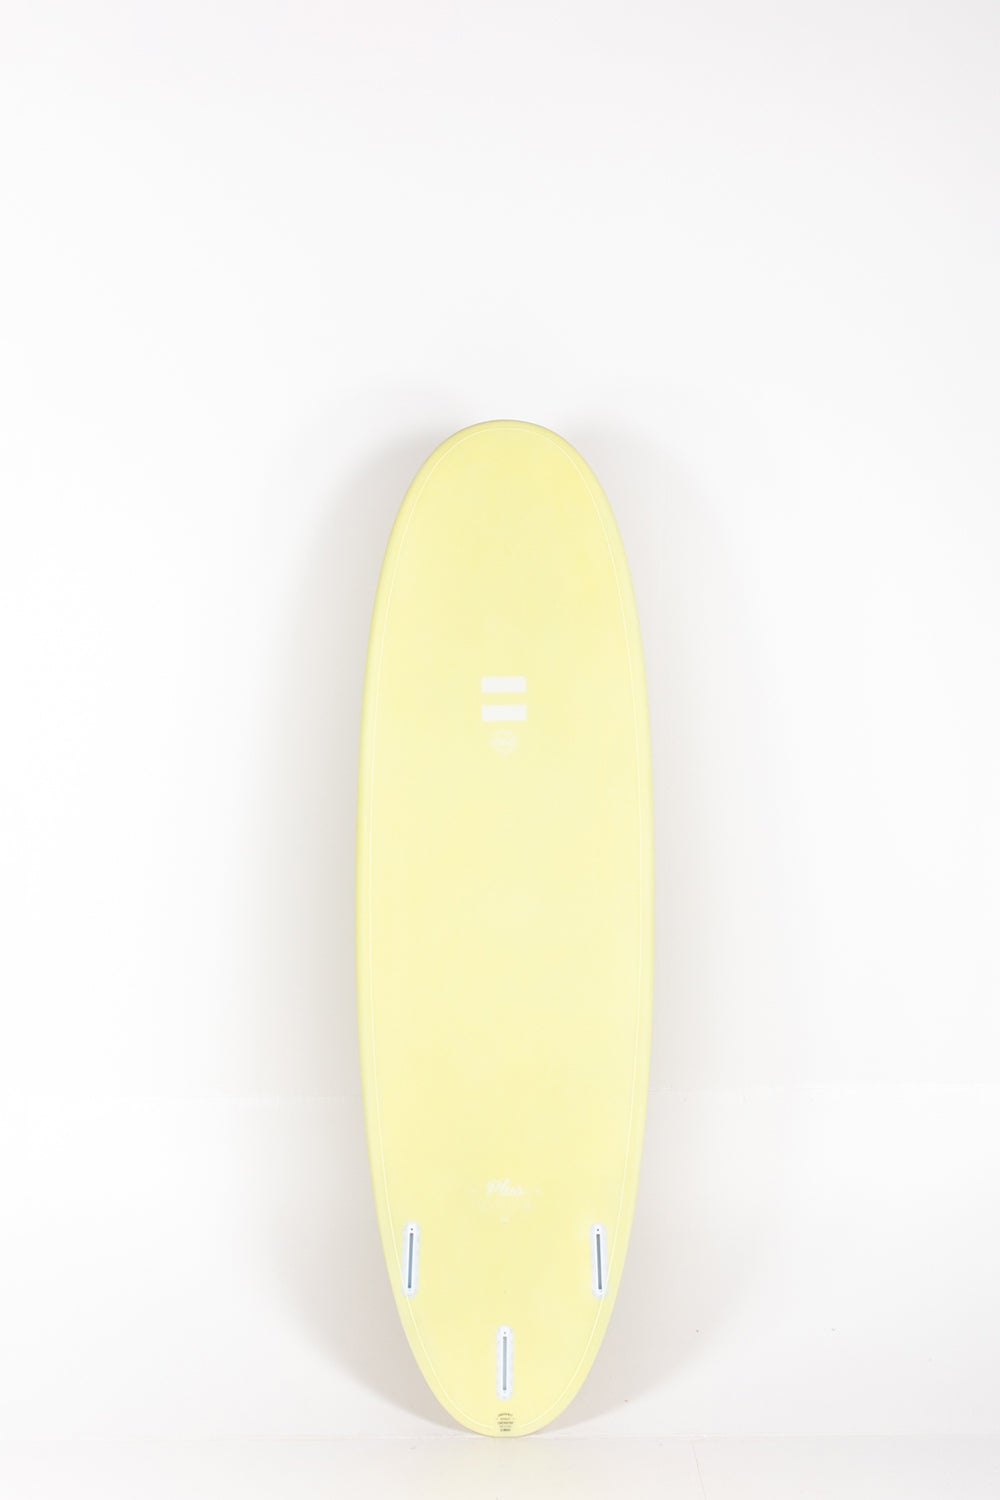 Pukas Surf Shop - Indio Endurance - PLUS Banana Light - 6´6" x 23 x 3 3/8 - 60L